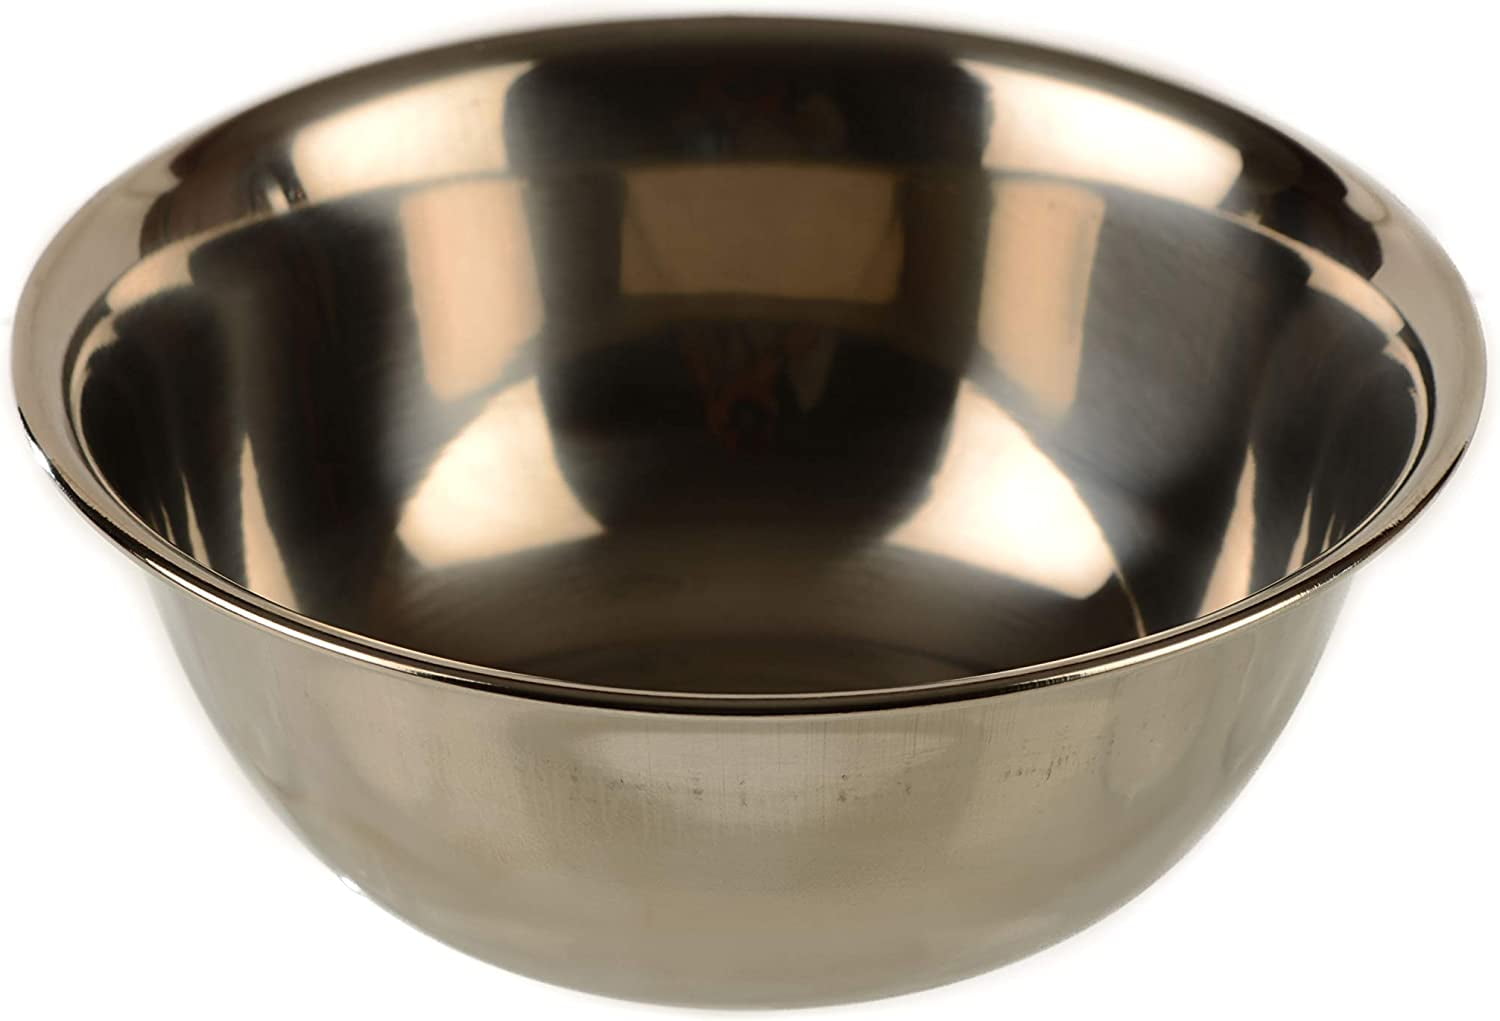 Makanai Stainless Steel Mixing Bowl Small